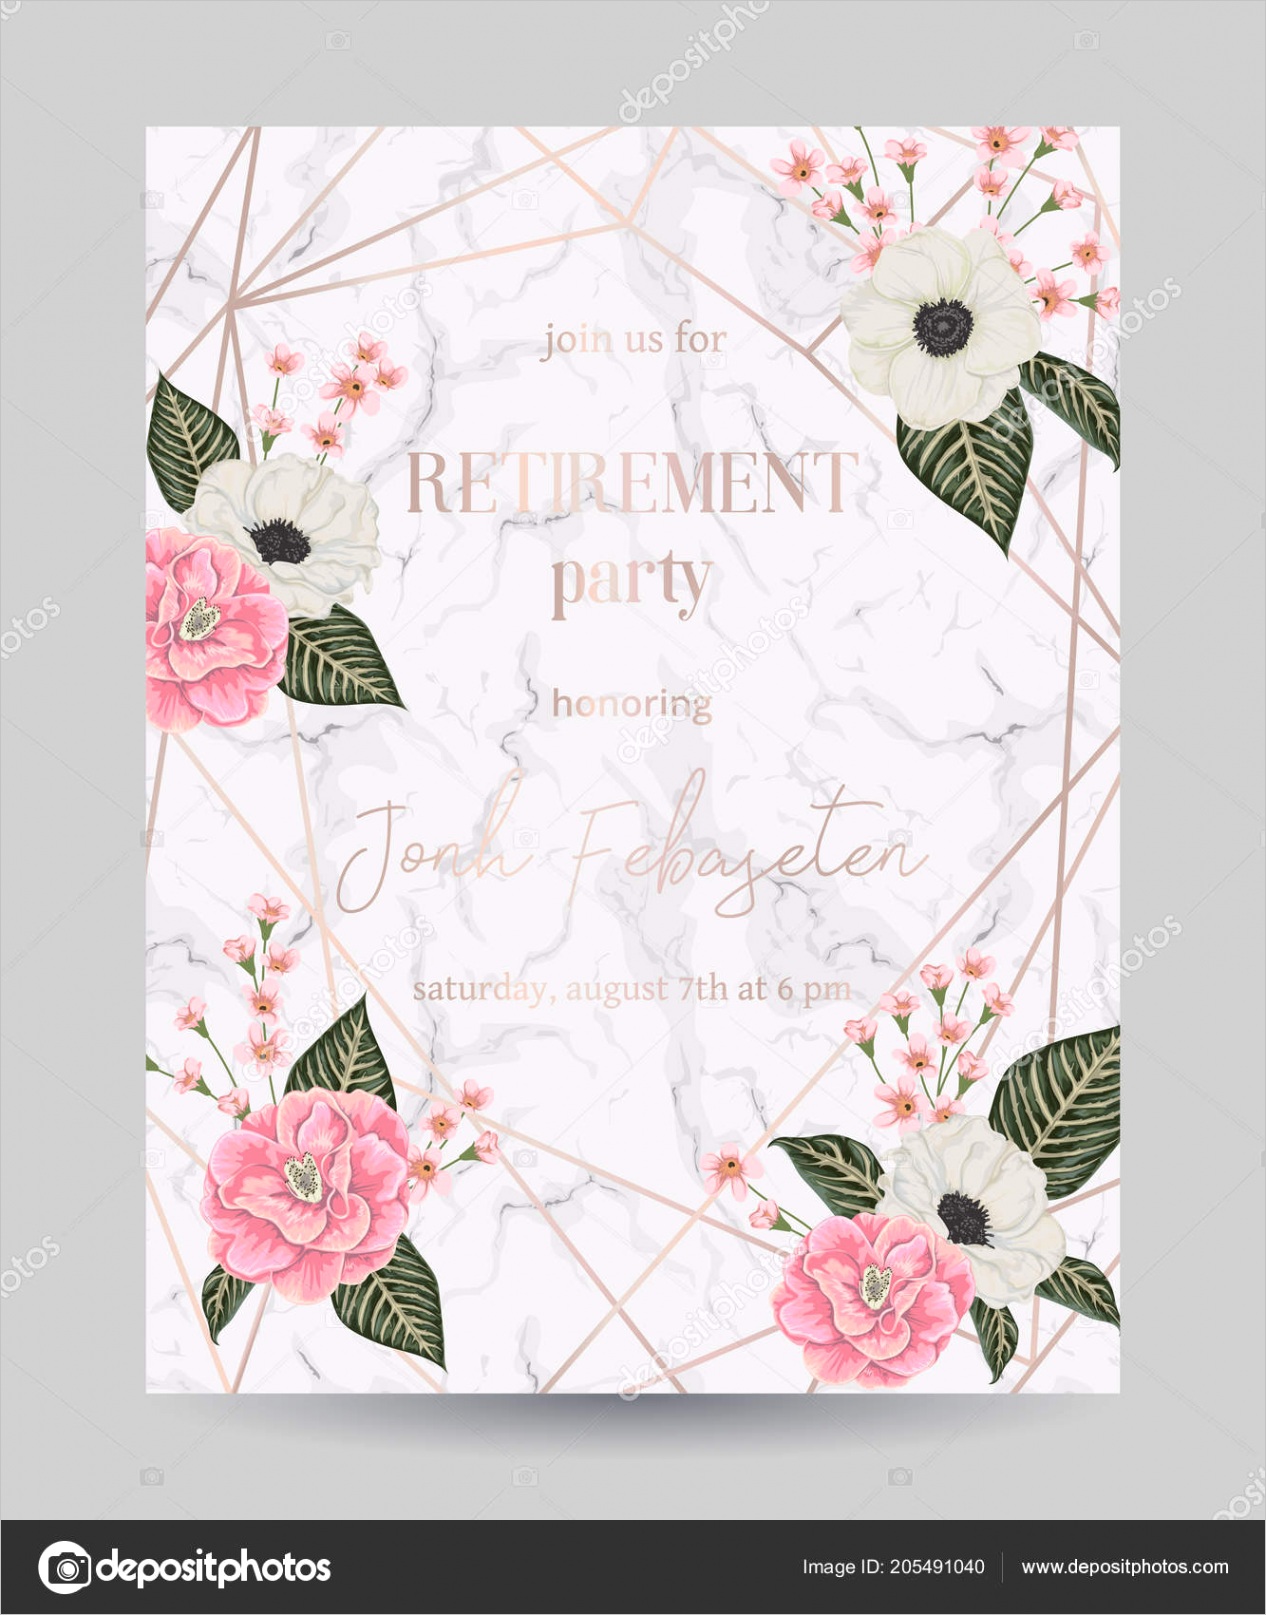 stock illustration retirement party invitation design templateml